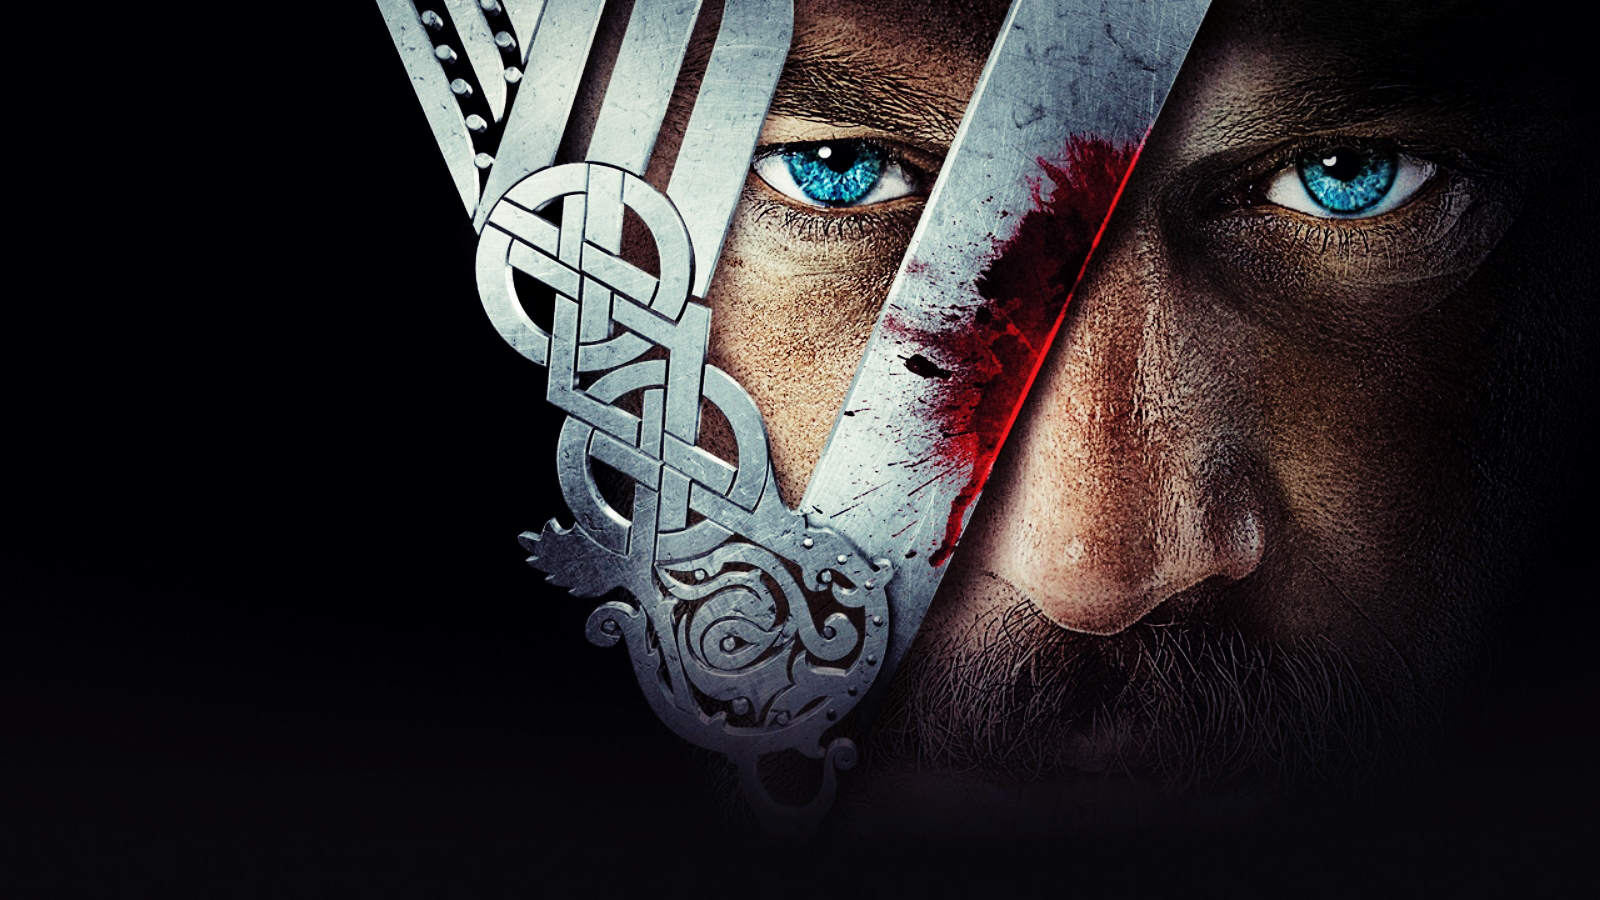 Vikings Tv Series Characters Poster HD Wallpaper